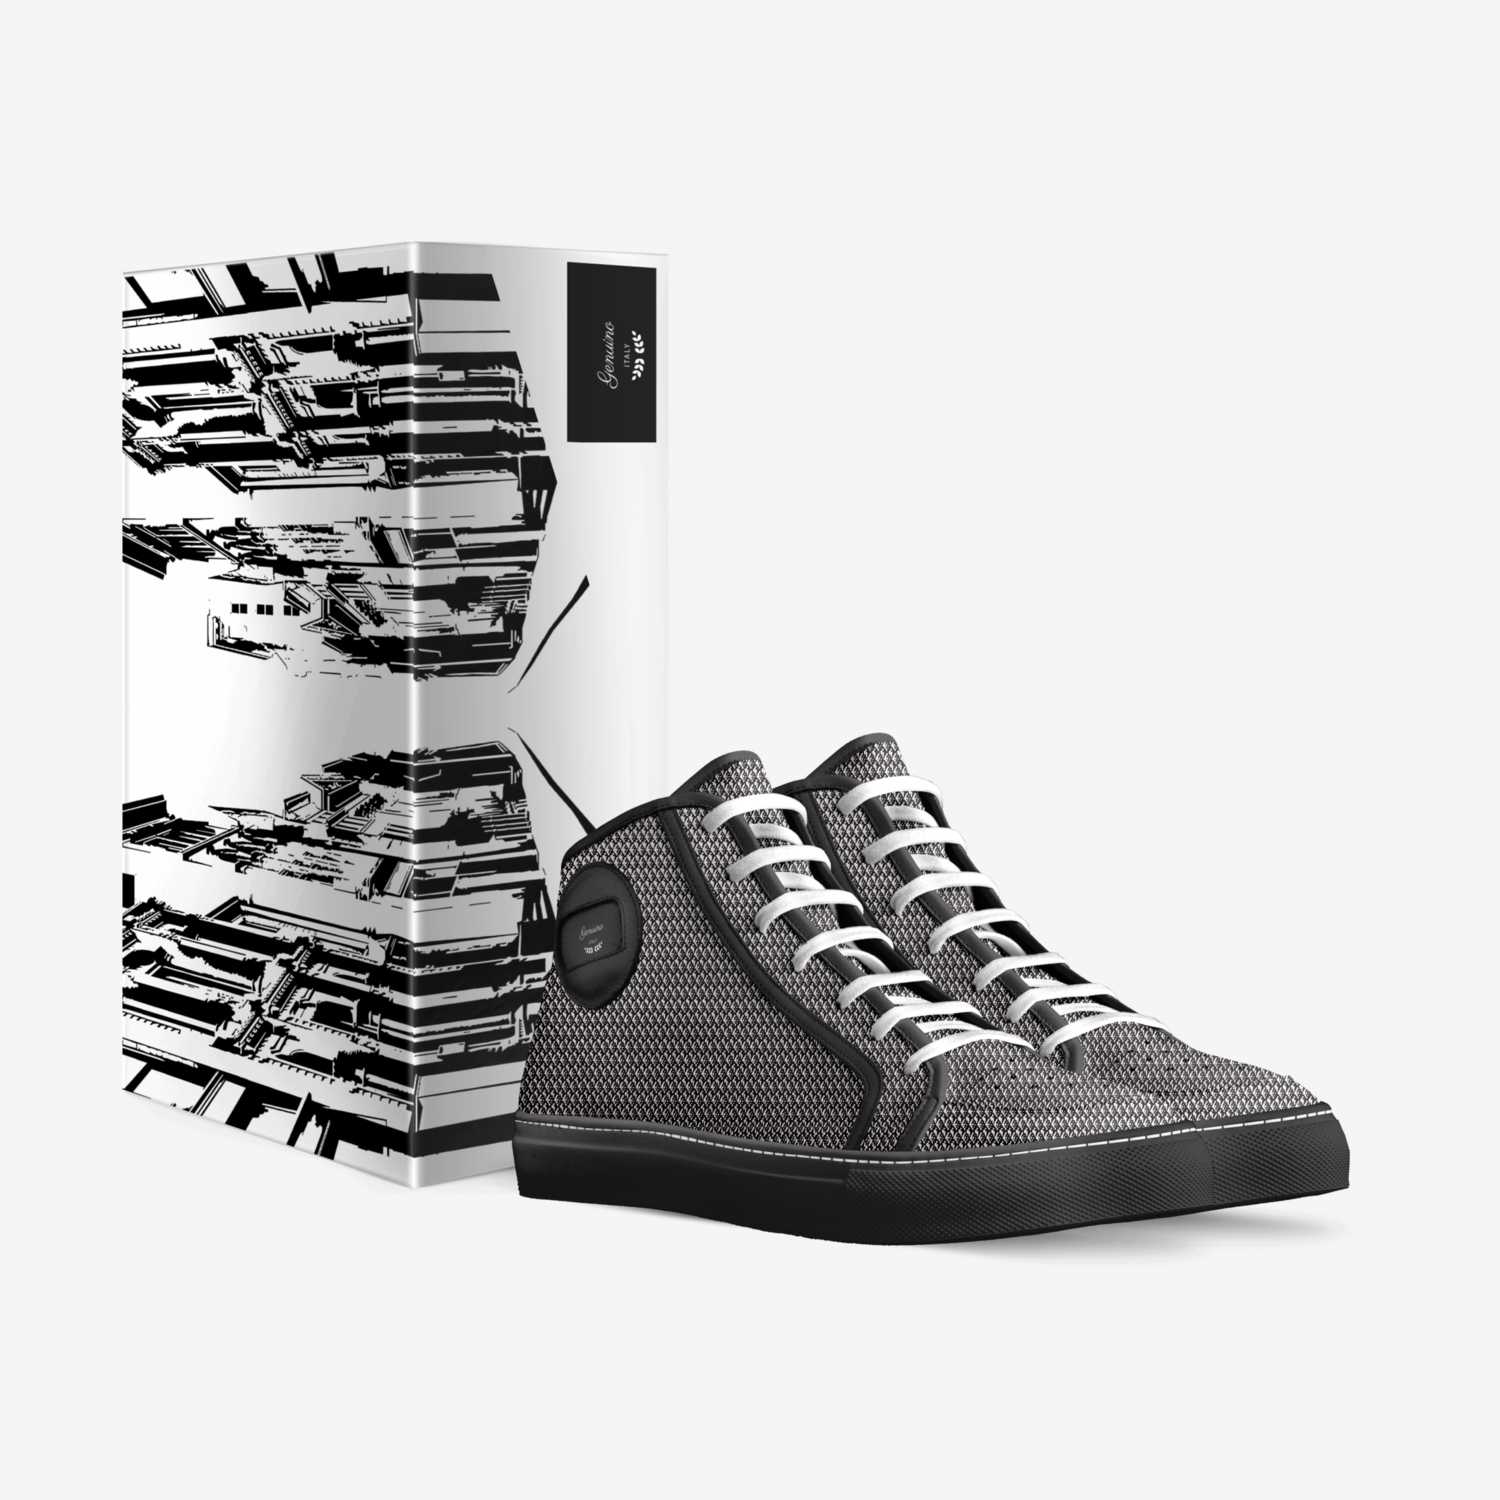 Genuino custom made in Italy shoes by Shalir Cottman | Box view